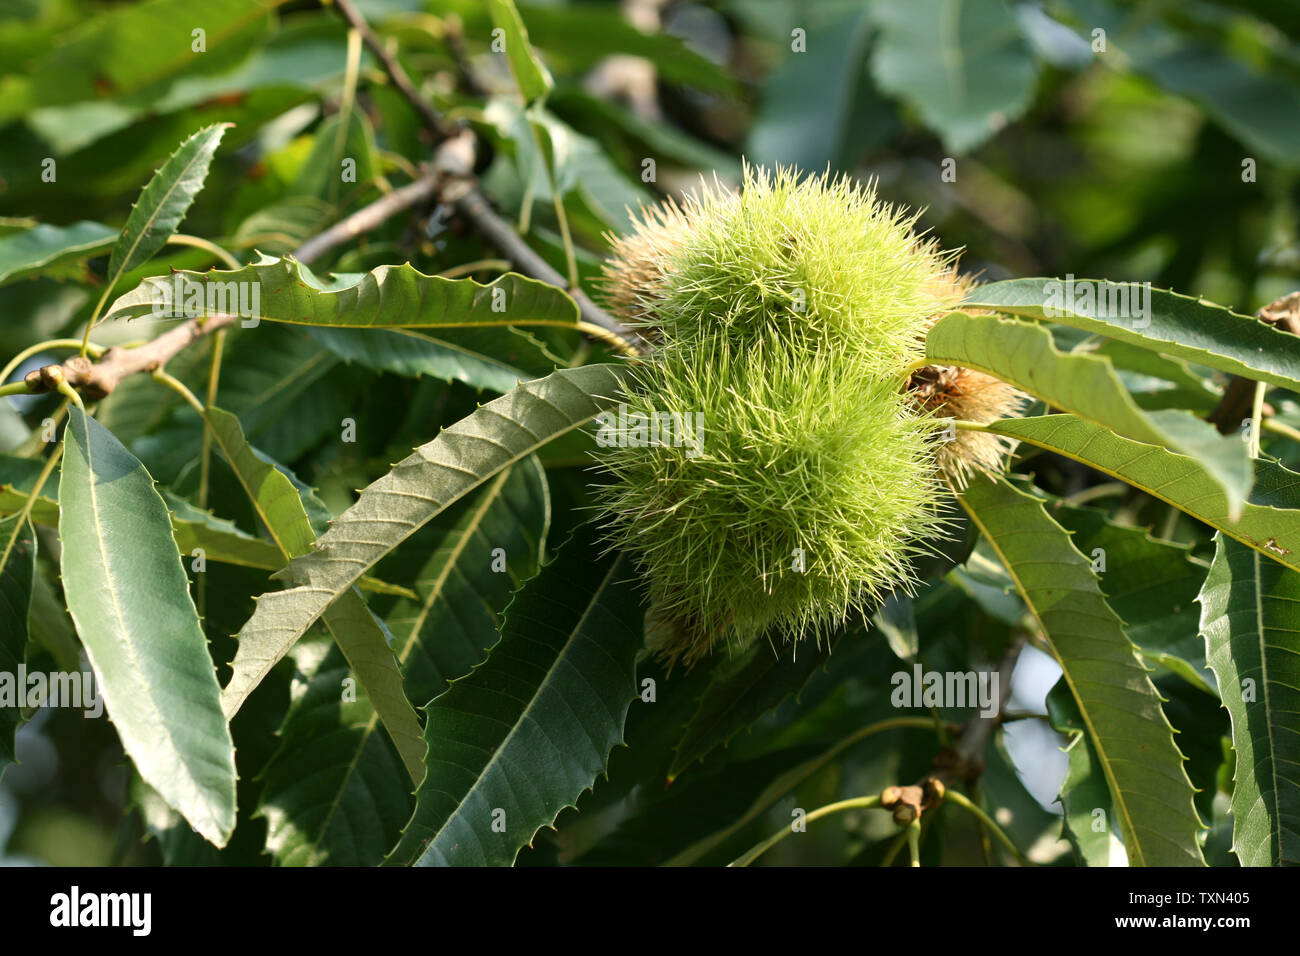 Chestnut tree with ripe seeds inside spiky cupules (calybium). Castanea sativa Stock Photo